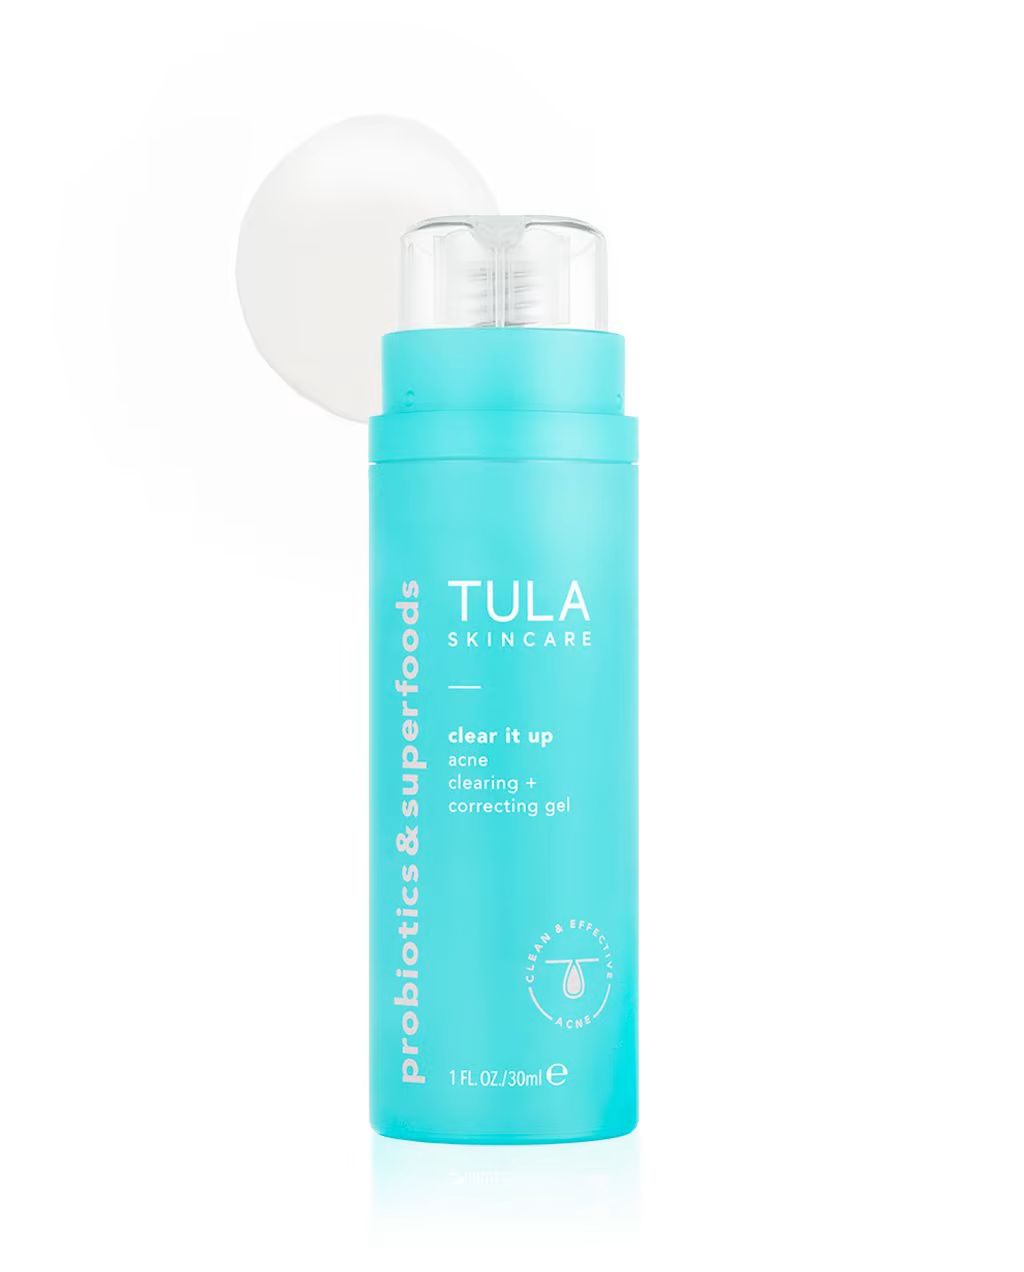 acne clearing + tone correcting gel | Tula Skincare